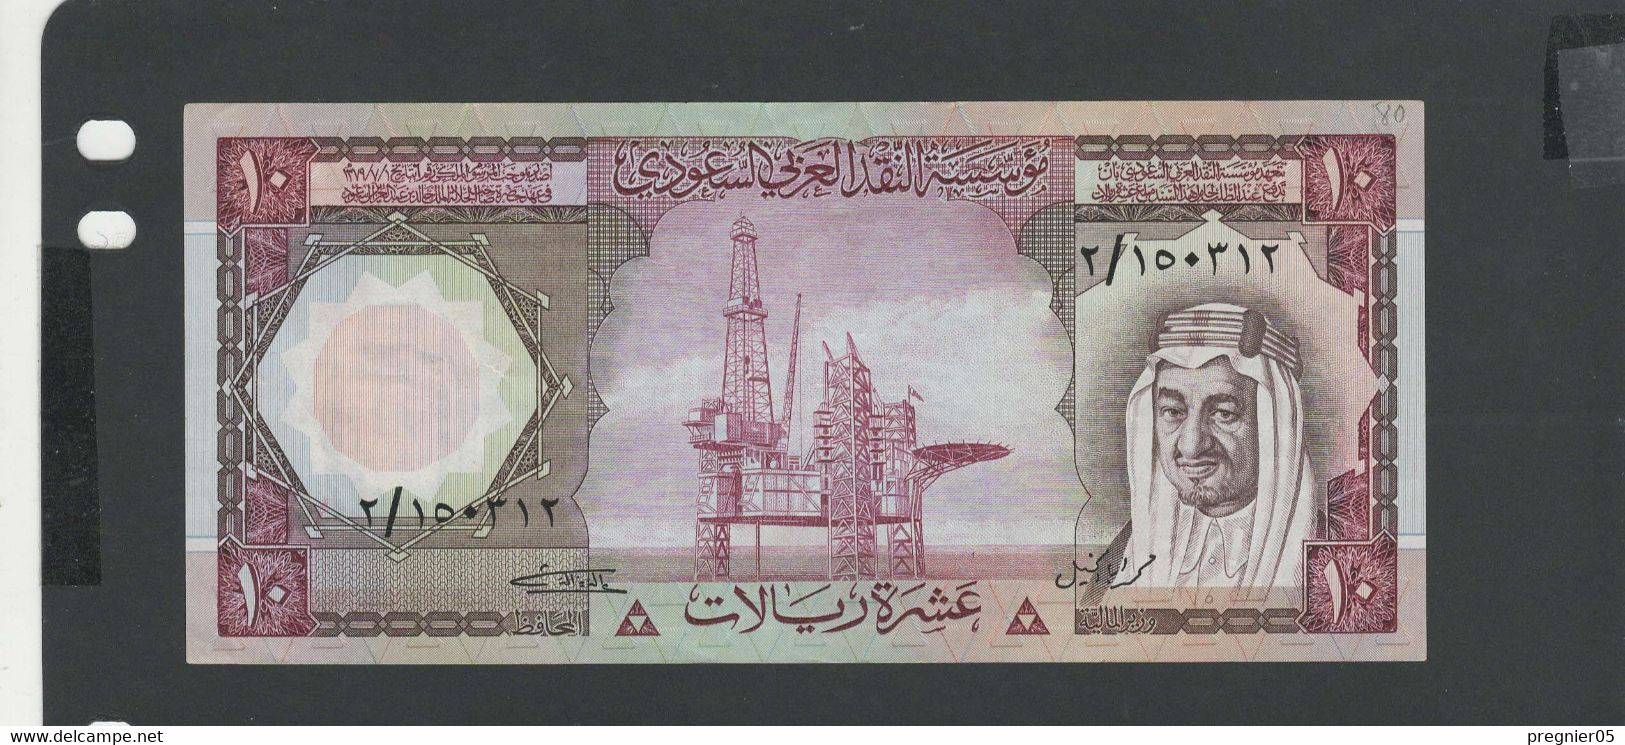 ARABIE SAOUDITE - Billet 10 Riyals 1977/82 SUP/XF Pick-18 - Arabie Saoudite